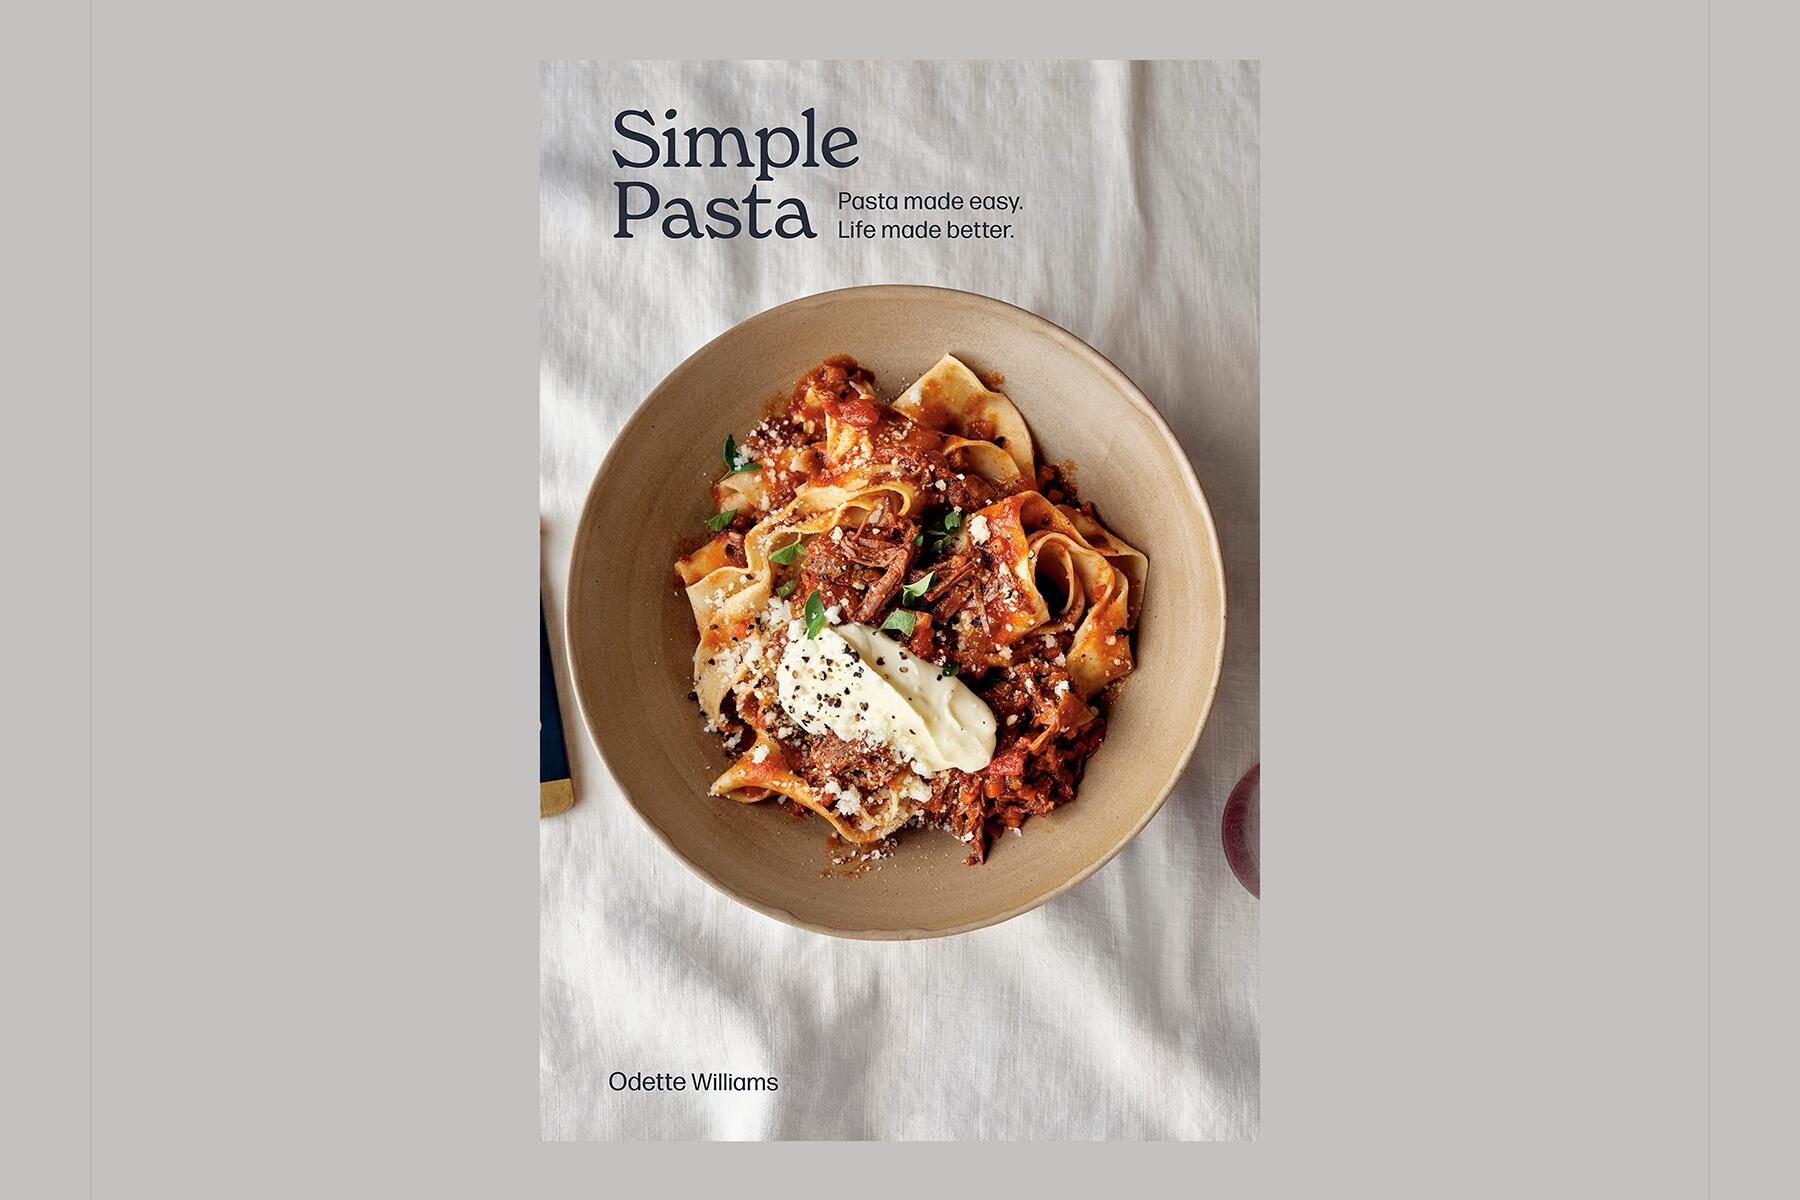 Italian Cookbook: Over 100 Classic Italian Recipes Included (Cookbooks,  Food, Recipe Books, Italian) (Italian Edition, Italian Cookbook, Italian